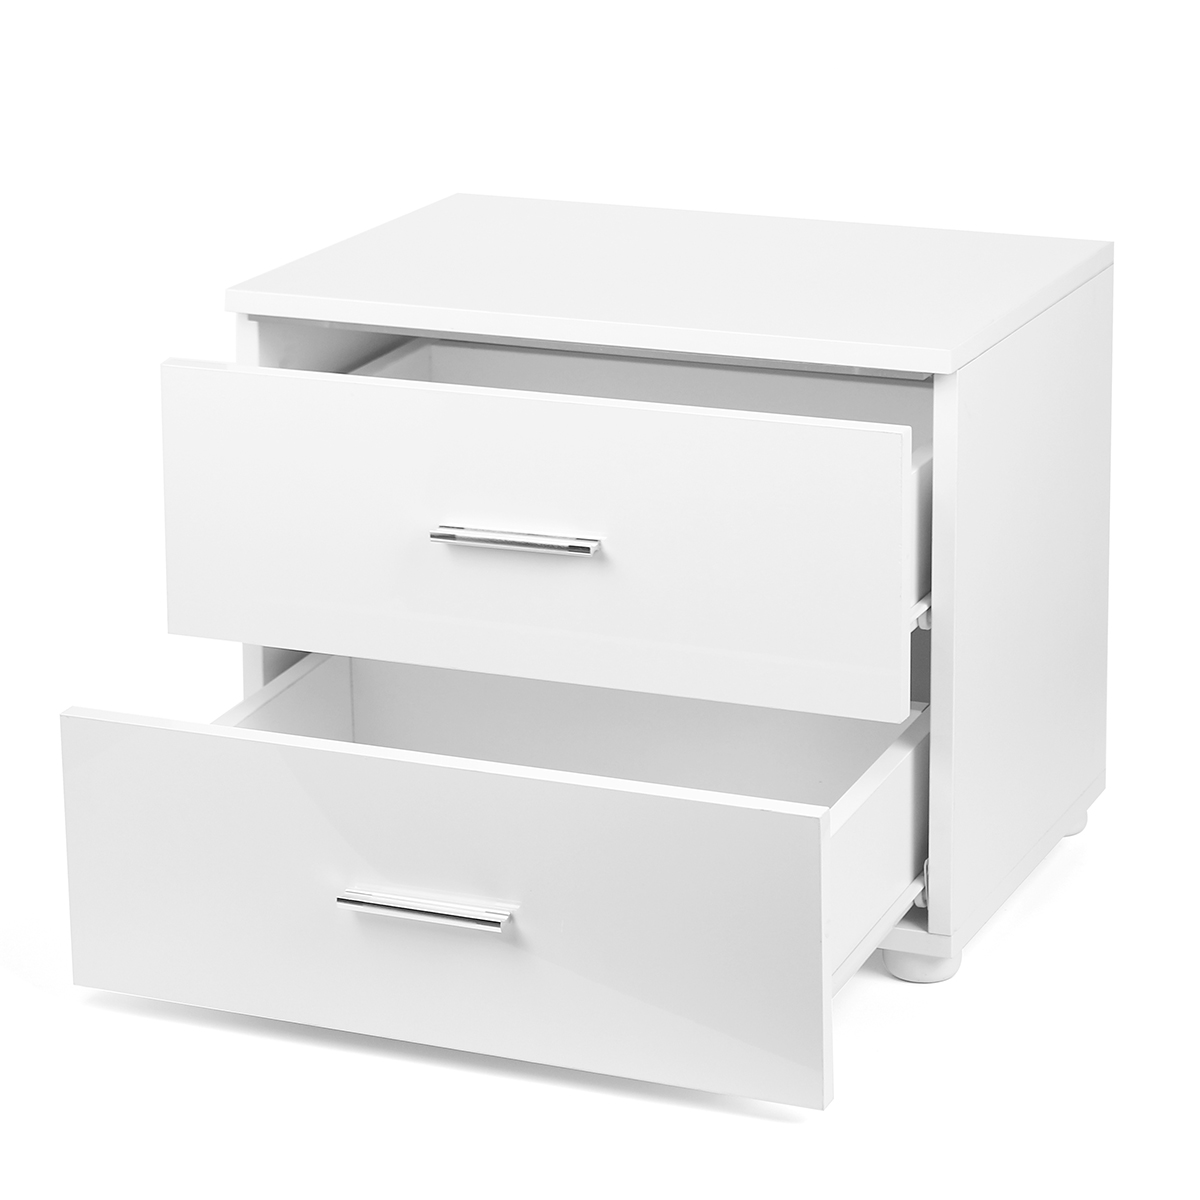 LED nightstand w/2 drawers - Hanson & Monroe